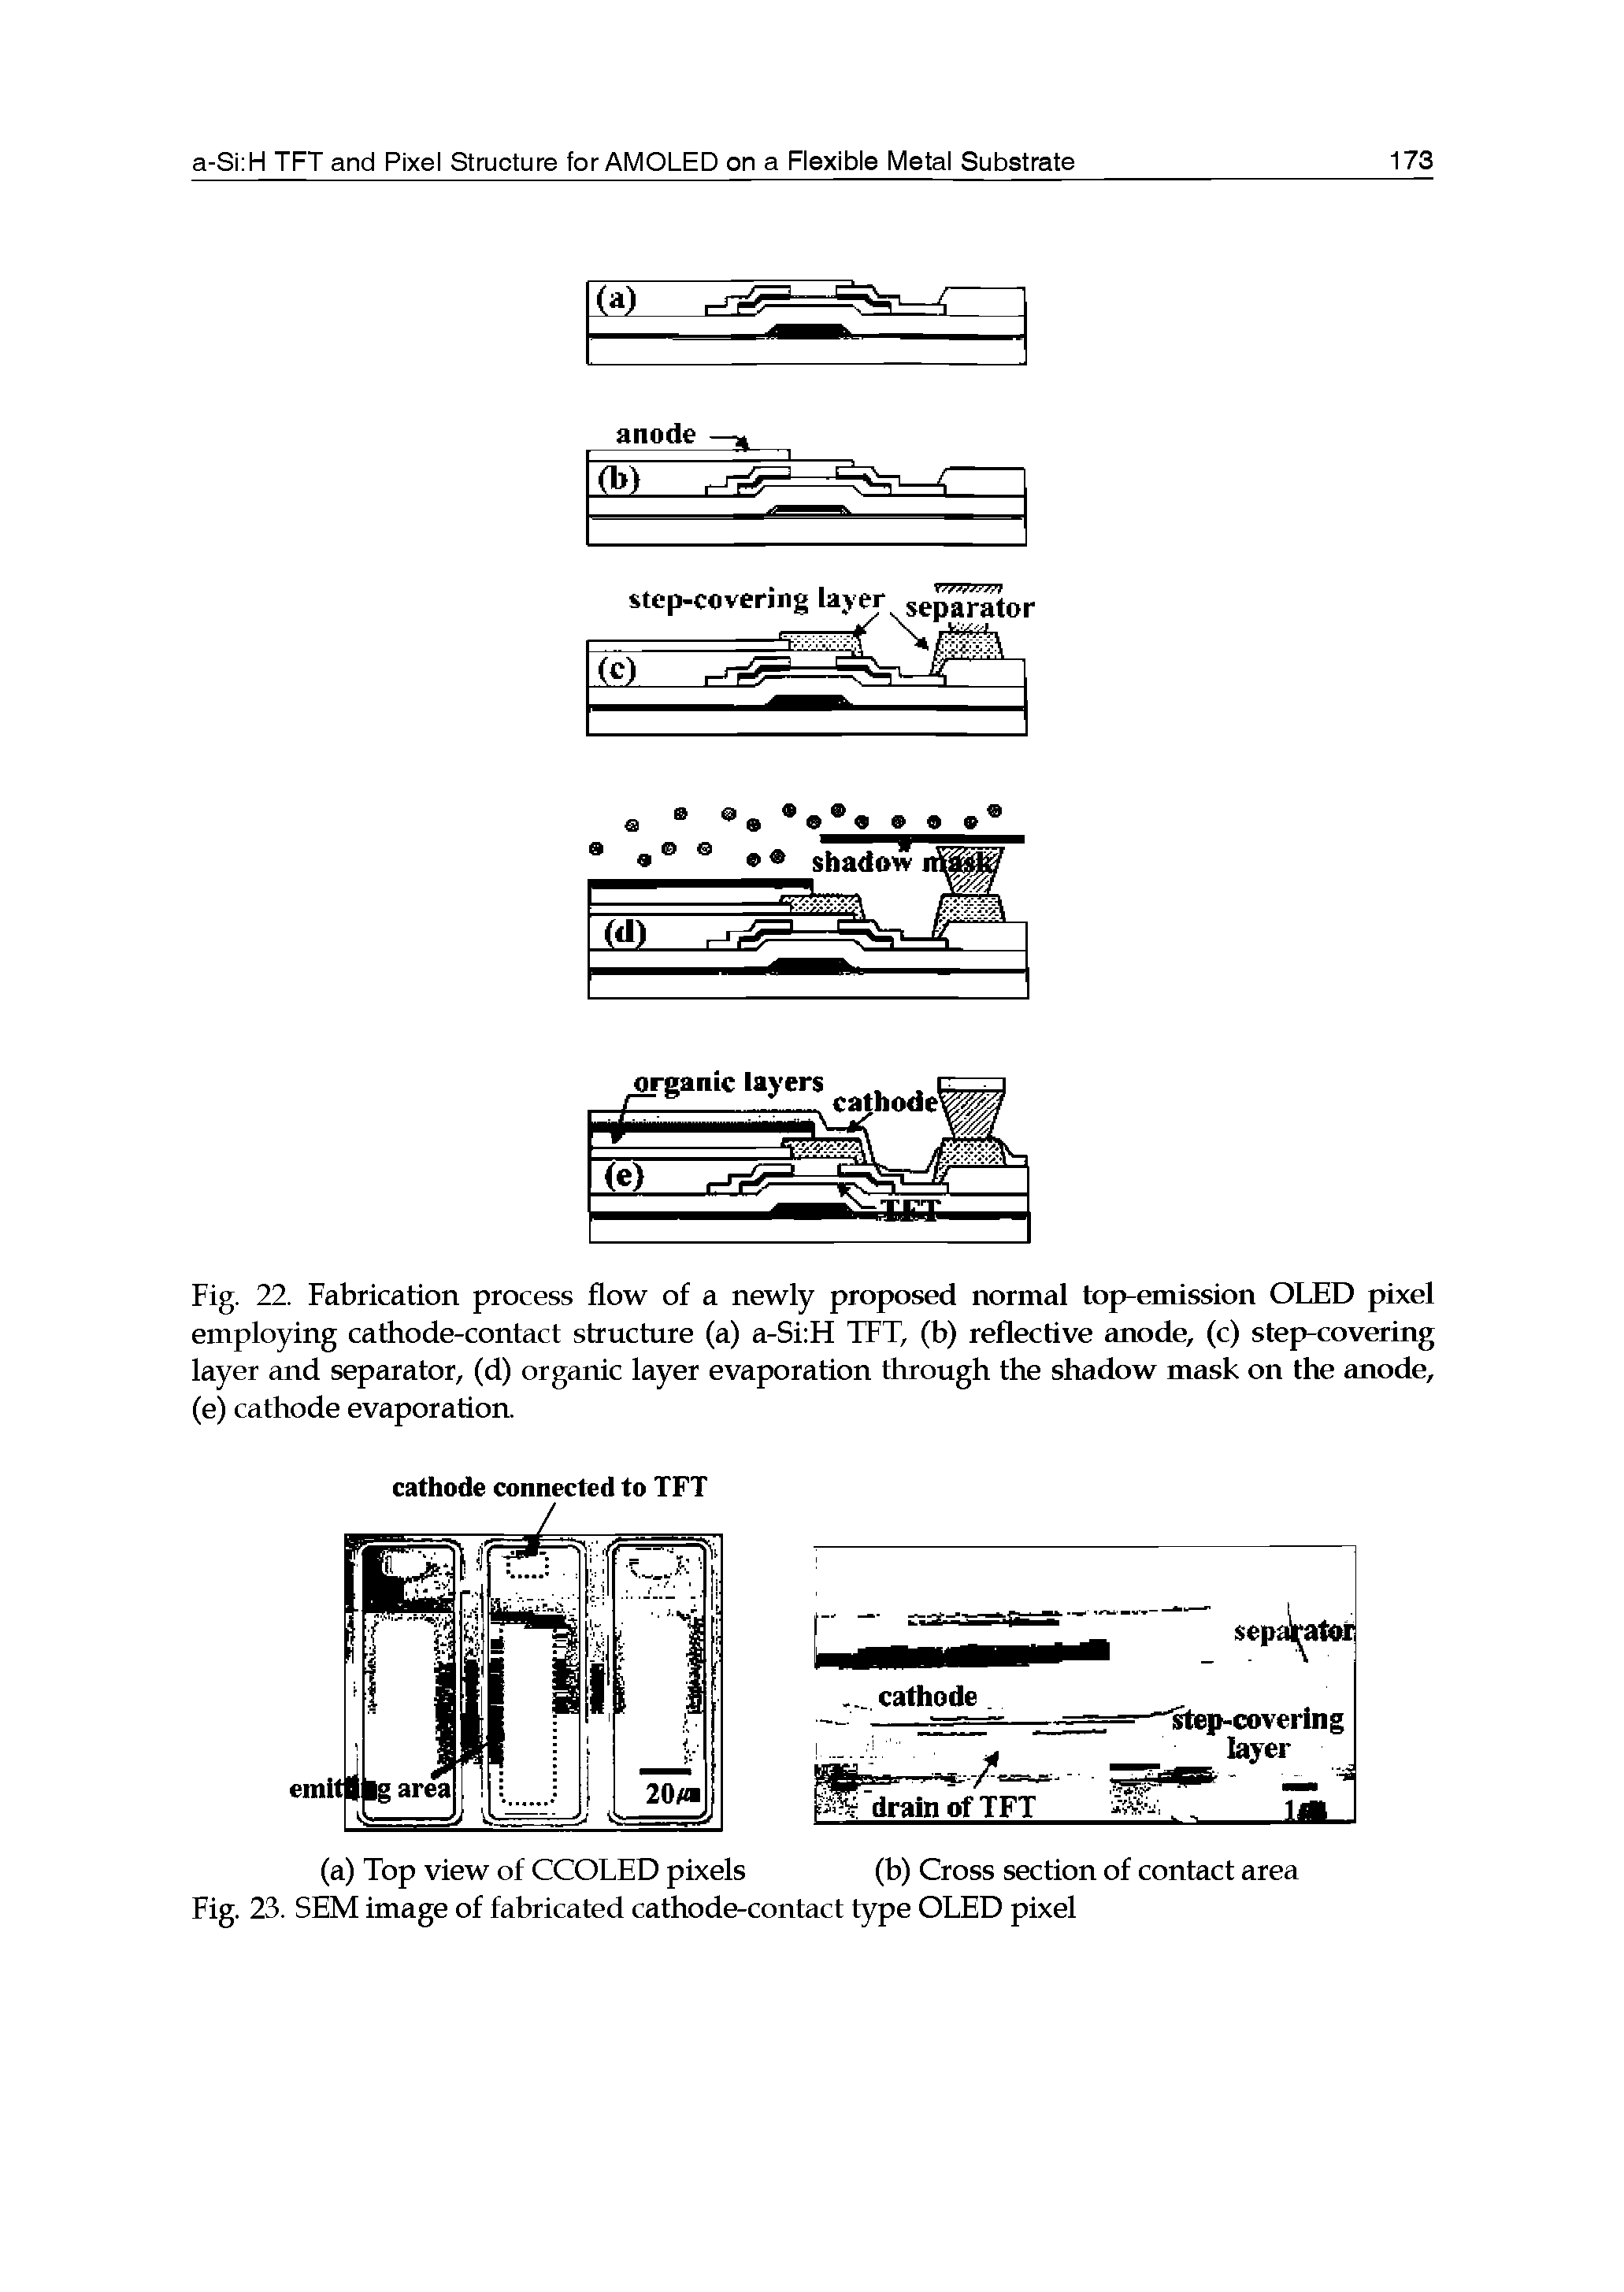 Fig. 23. SEM image of fabricated cathode-contact type OLED pixel...